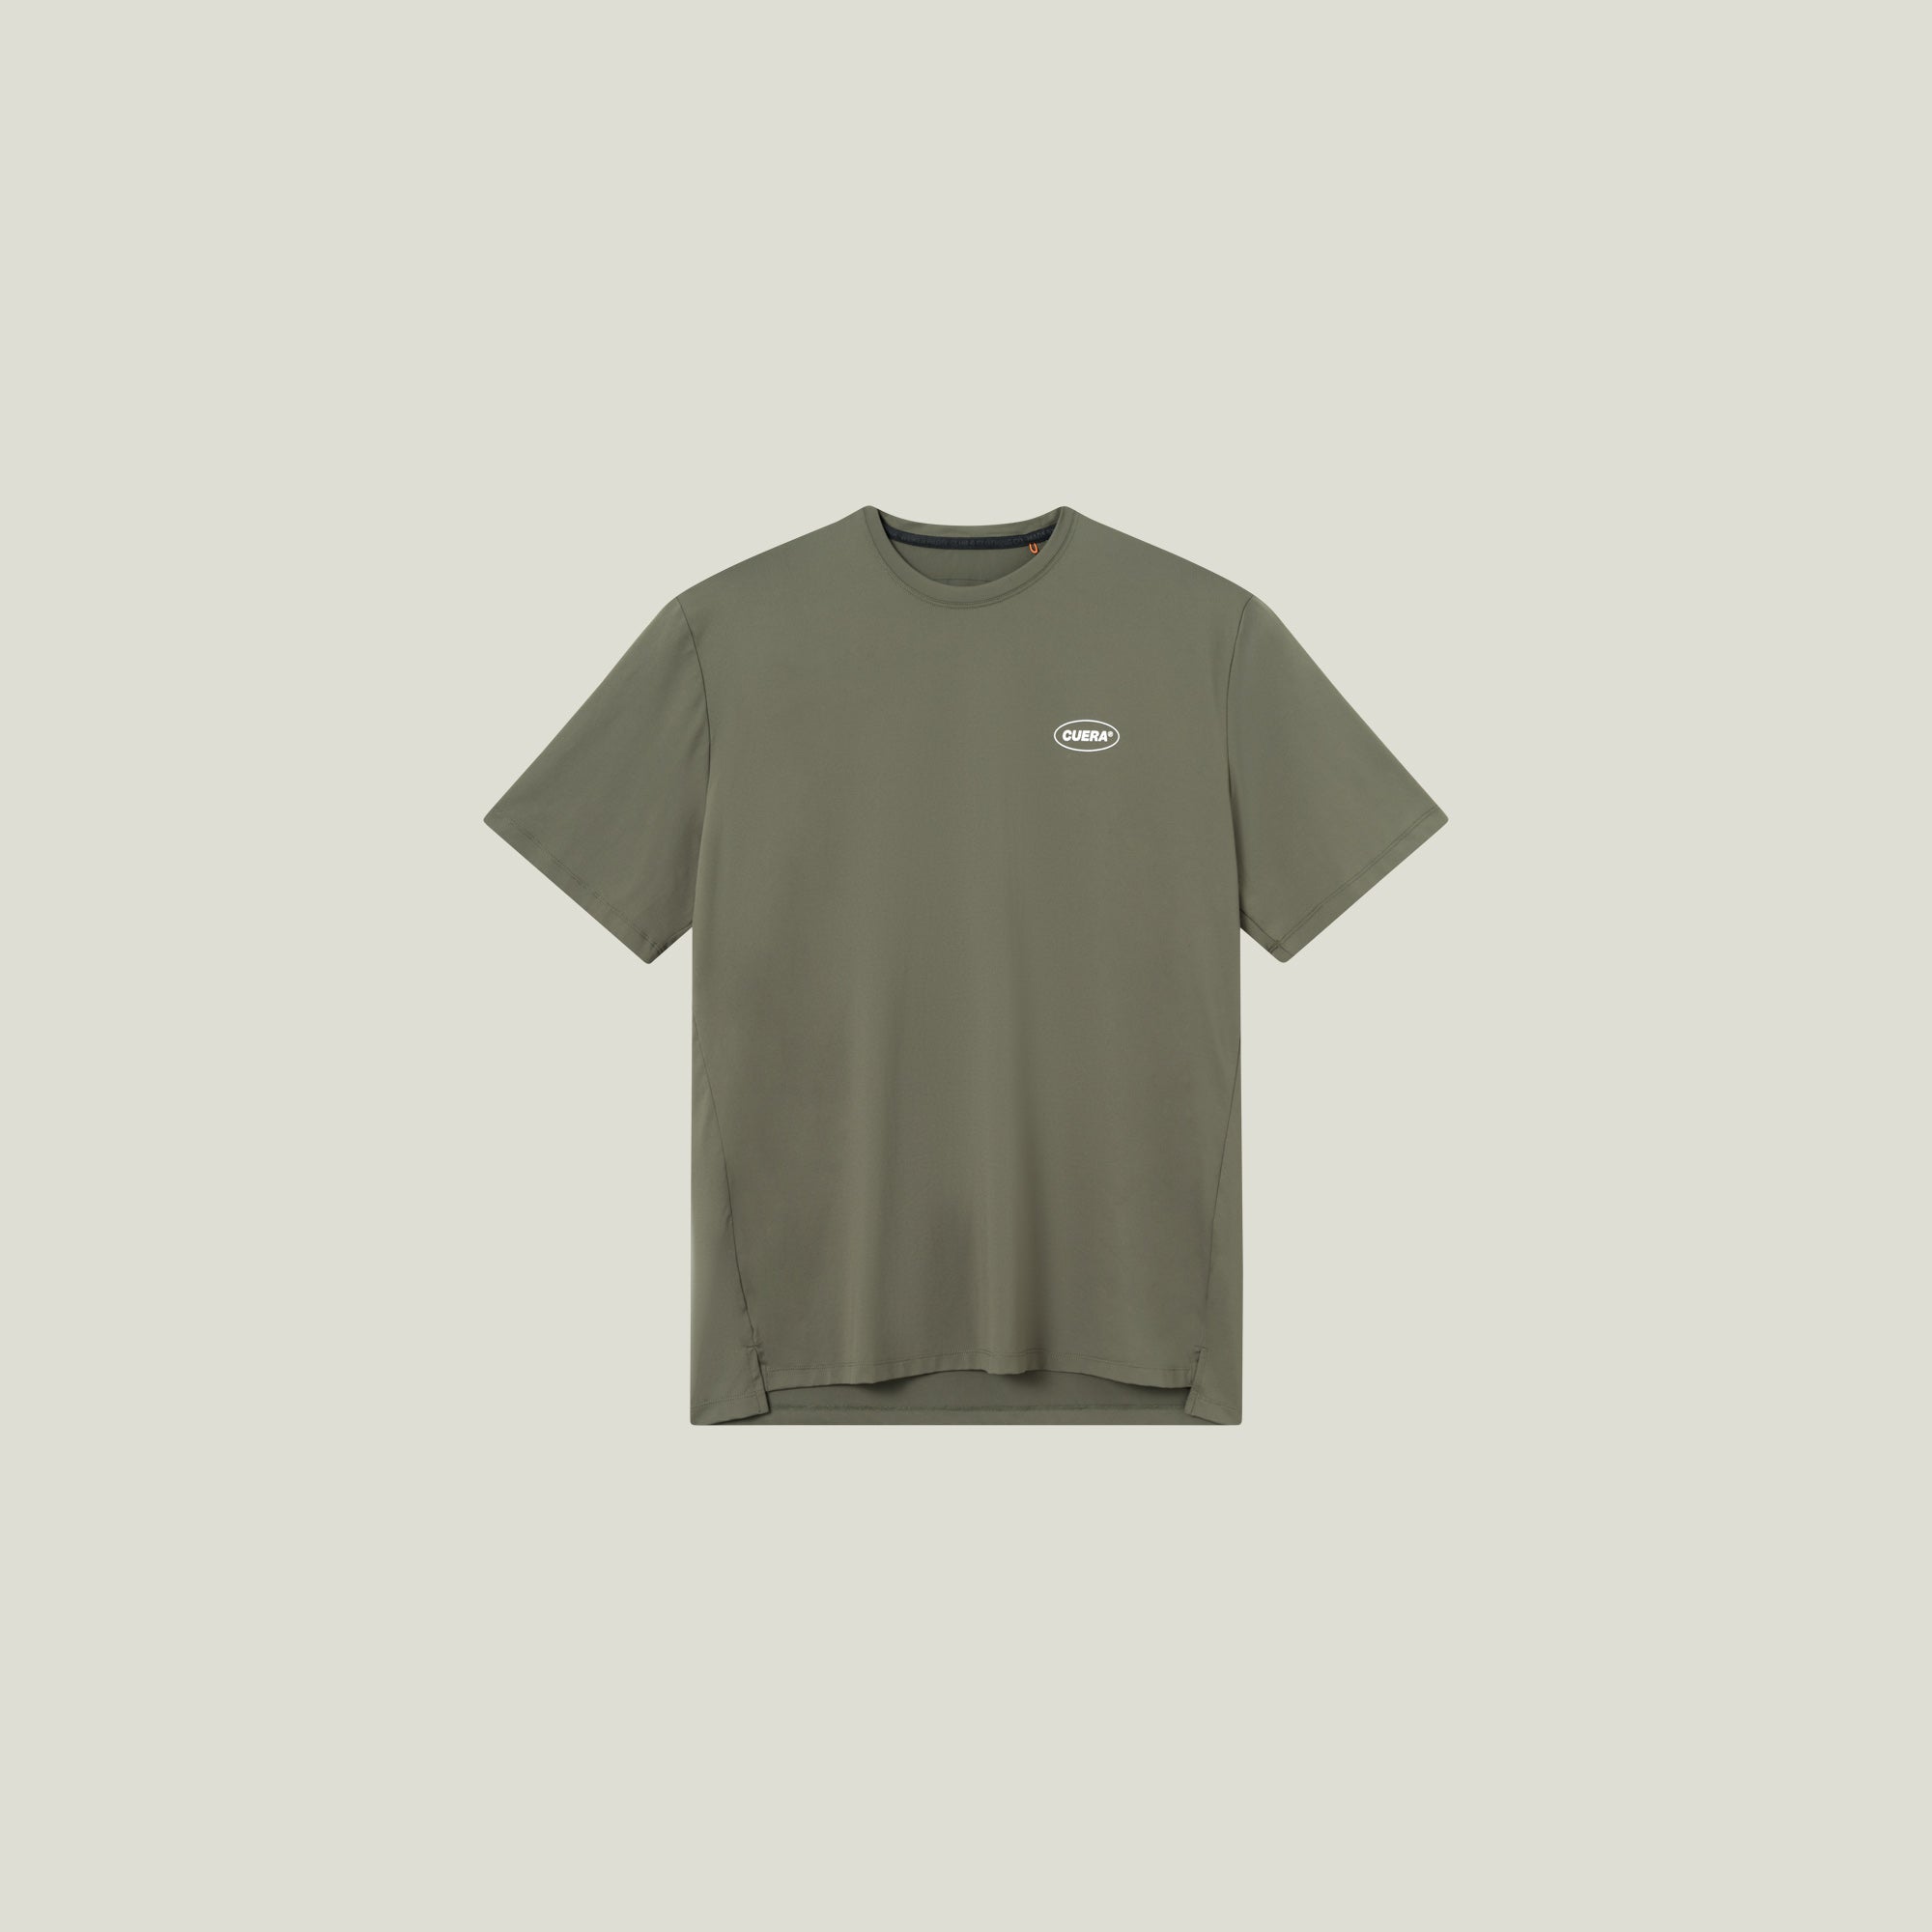 Cuera Oncourt Made T-shirt (Army) - XL